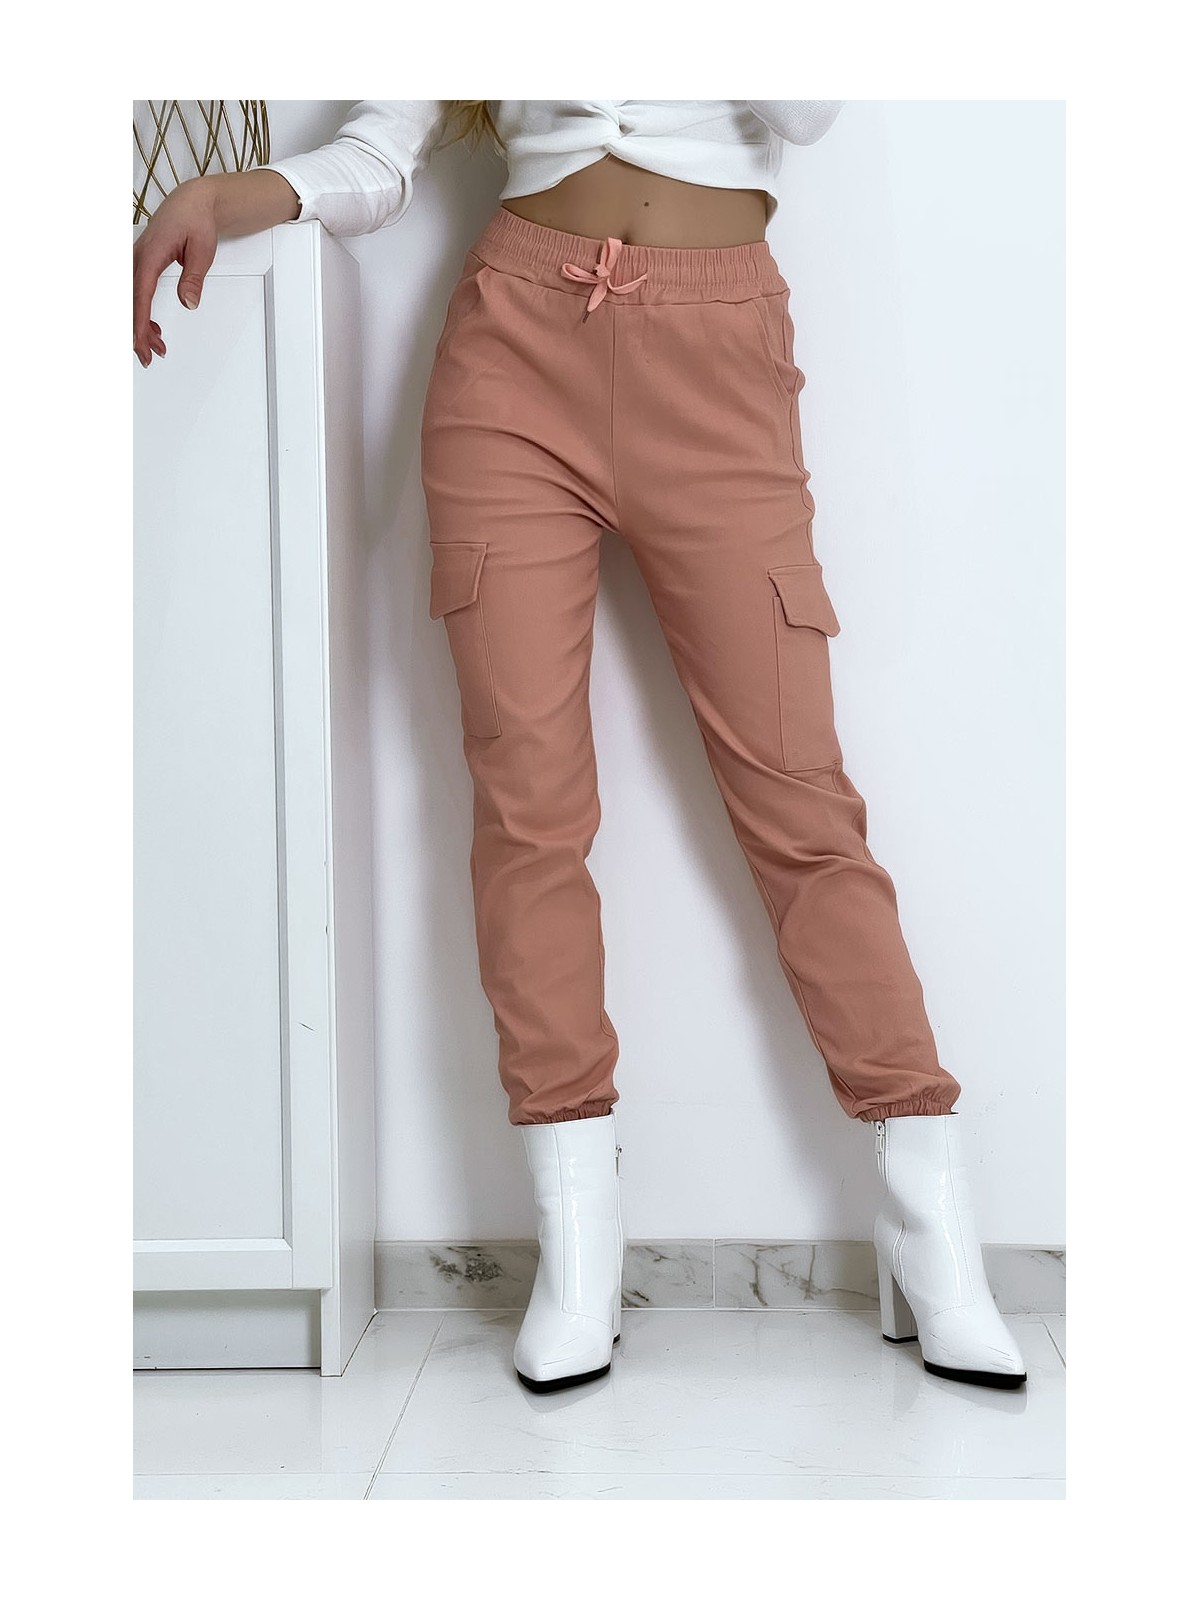 Pantalon treillis rose en strech avec poches - 8